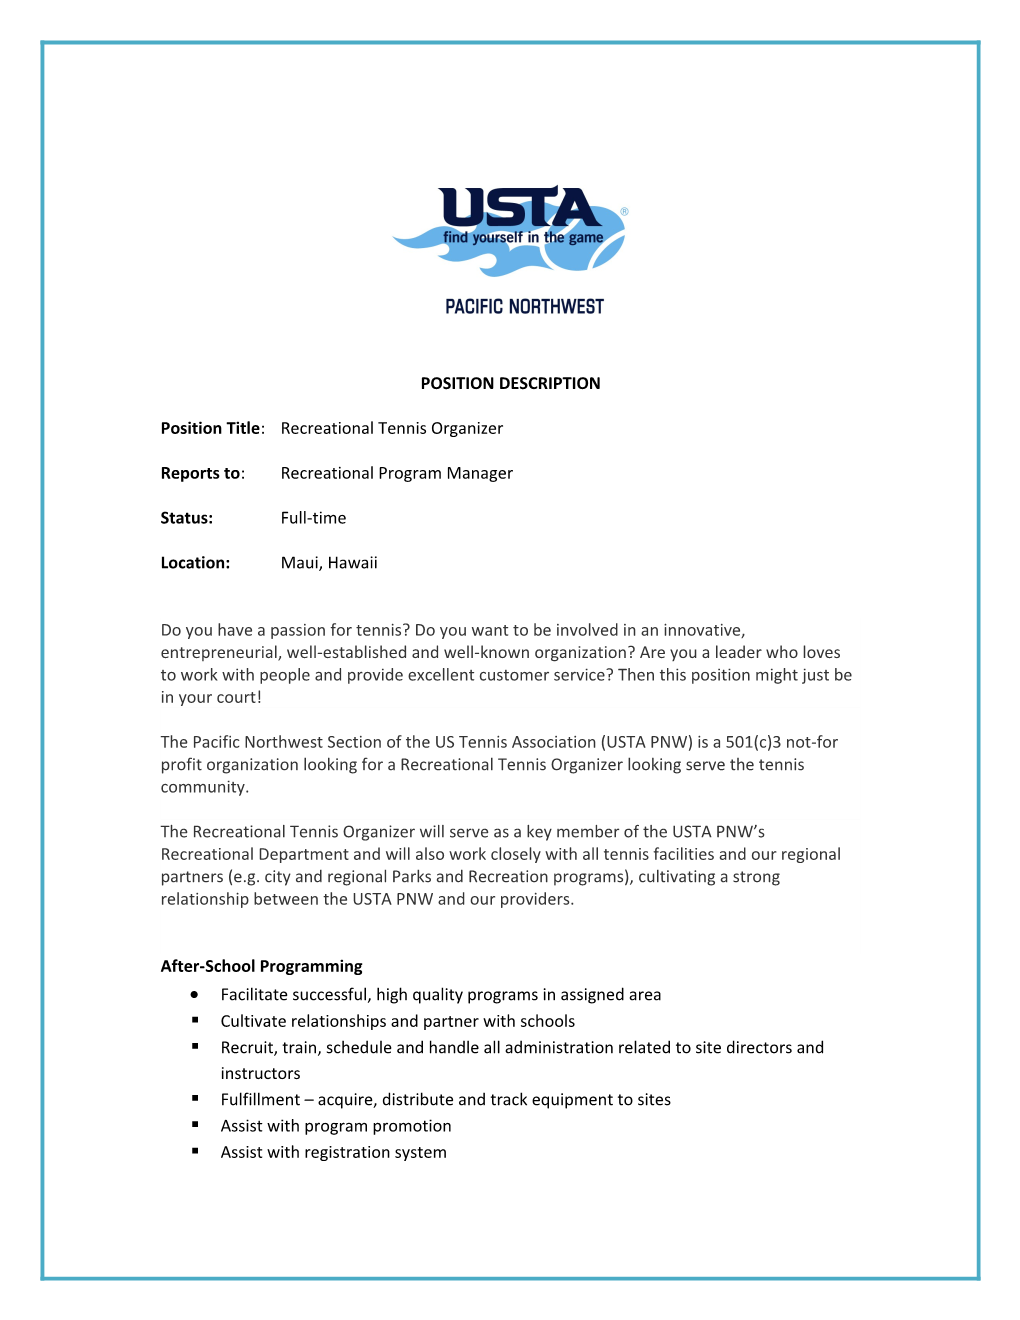 USTA /PNW Proposal